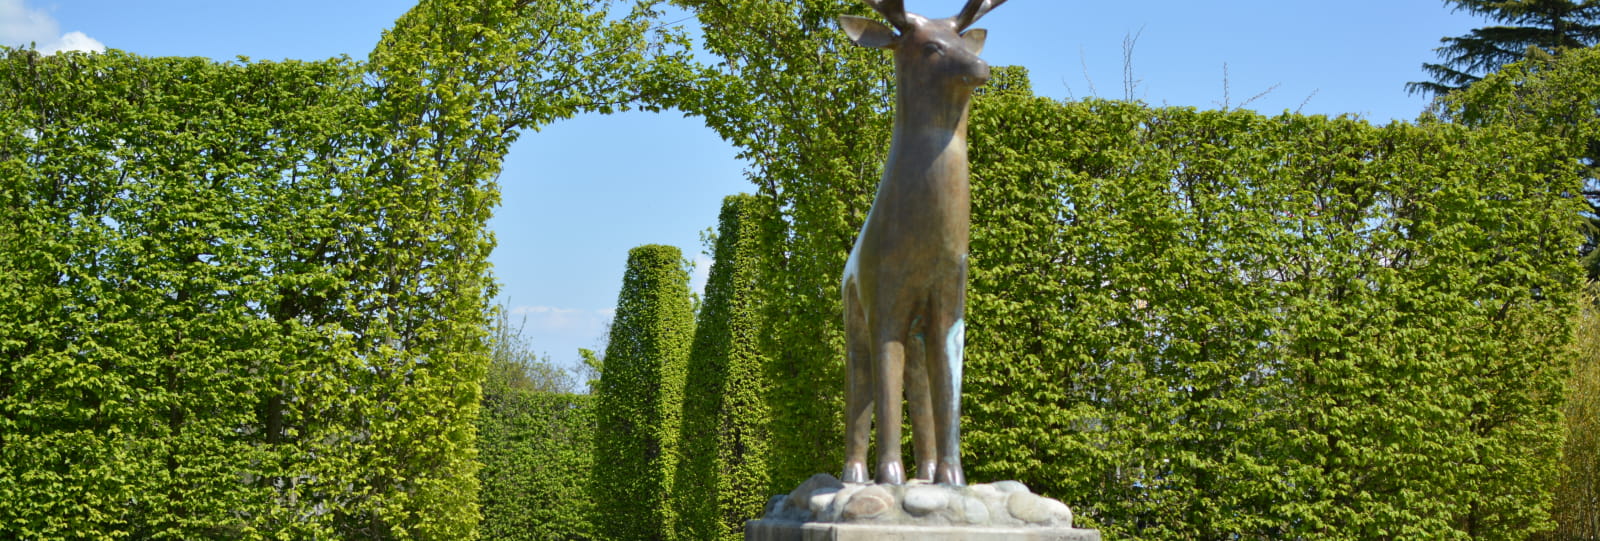 Sculpture 'Le Cerf' de Toros